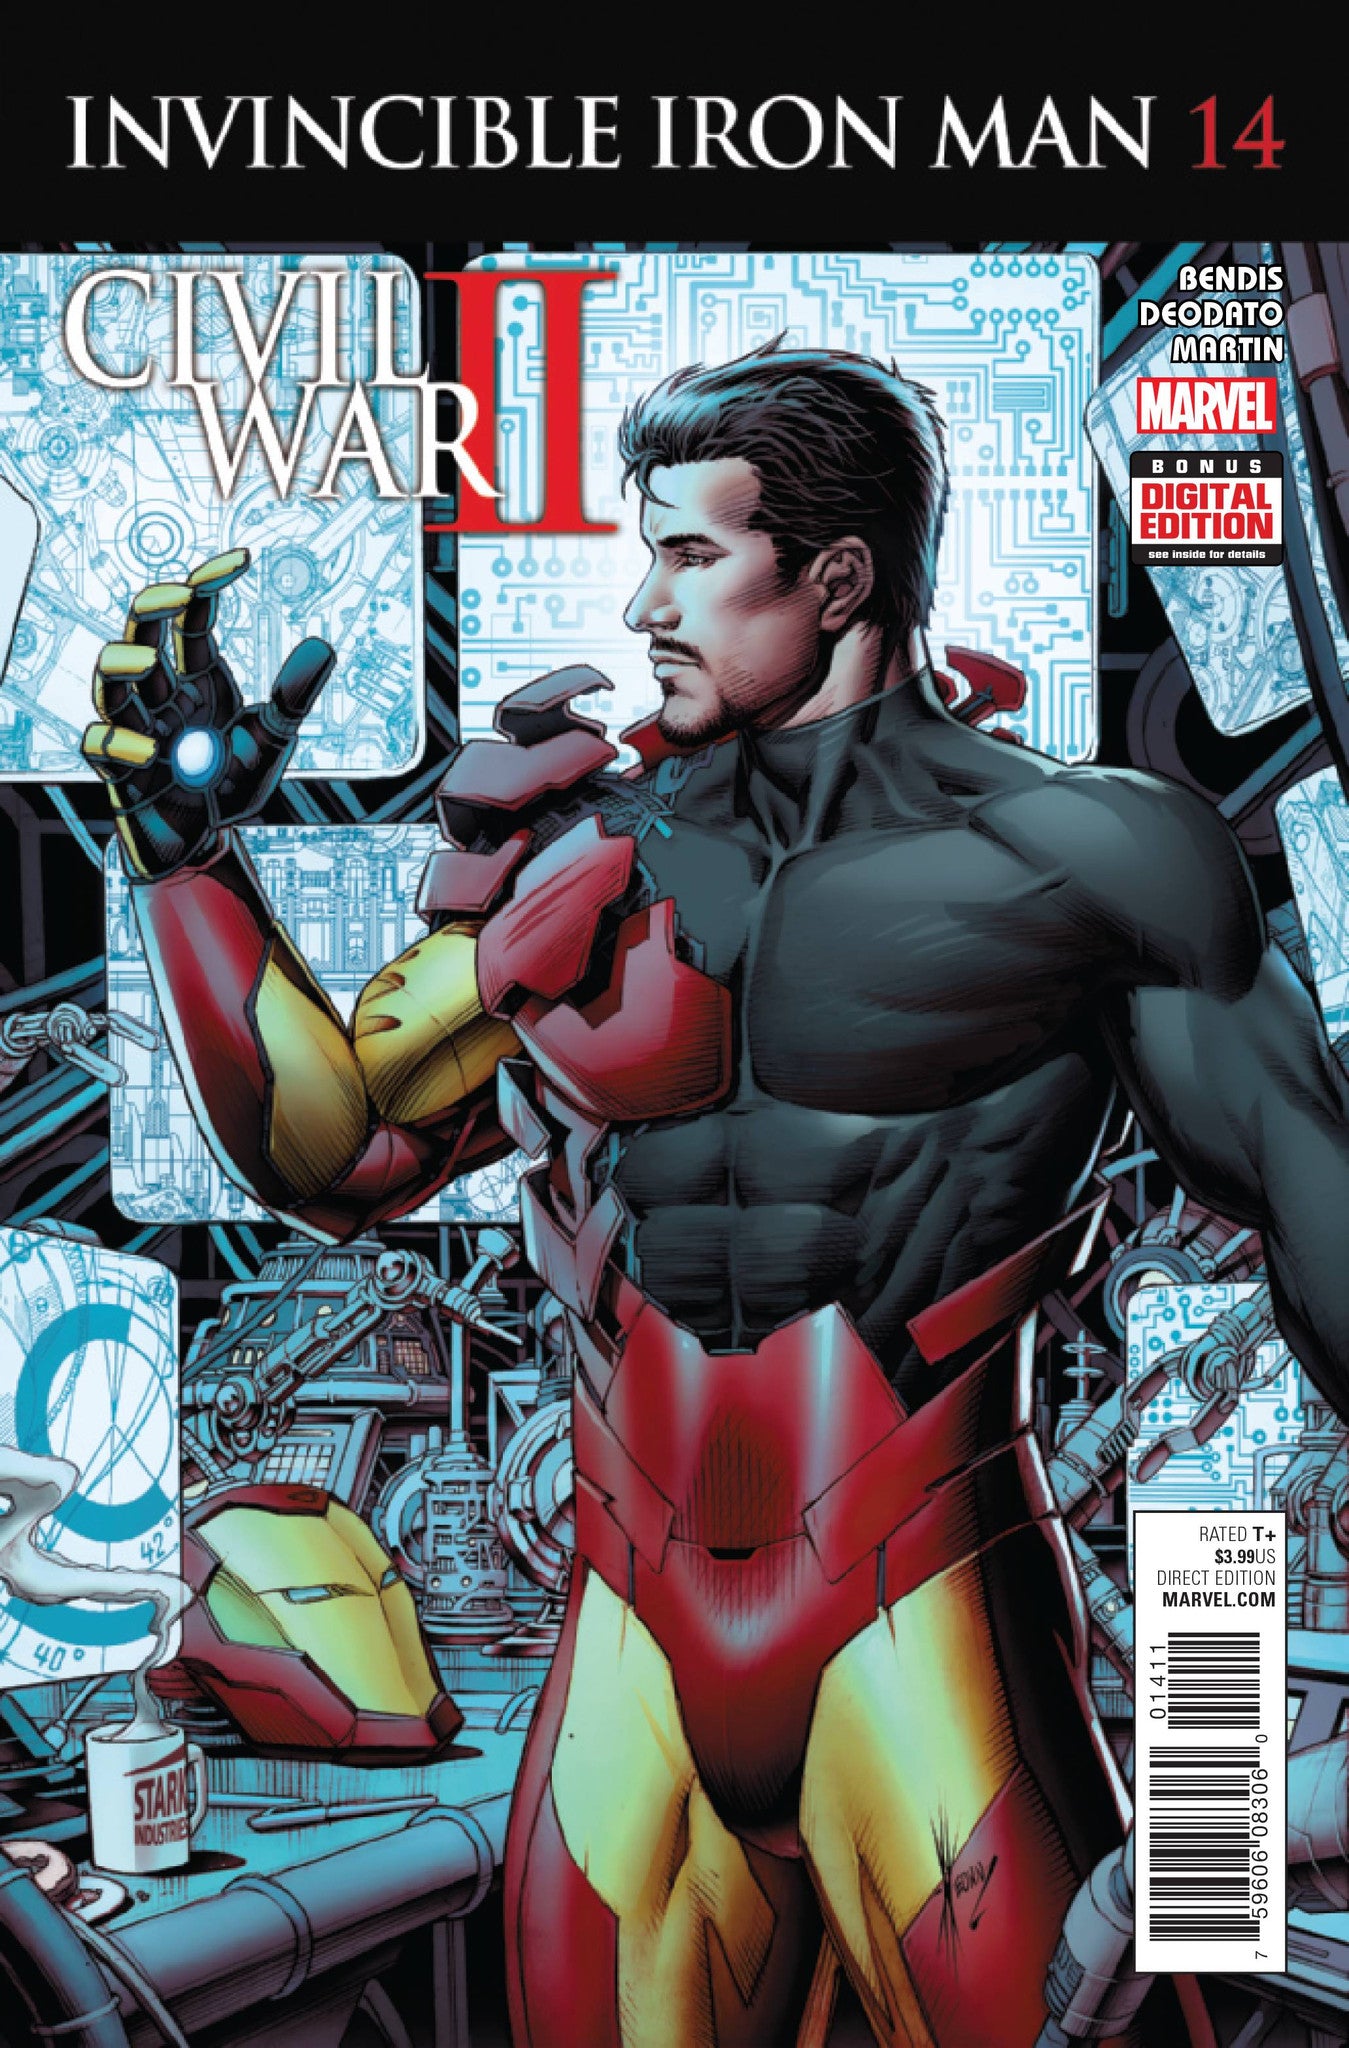 INVINCIBLE IRON MAN #14 CW2 COVER